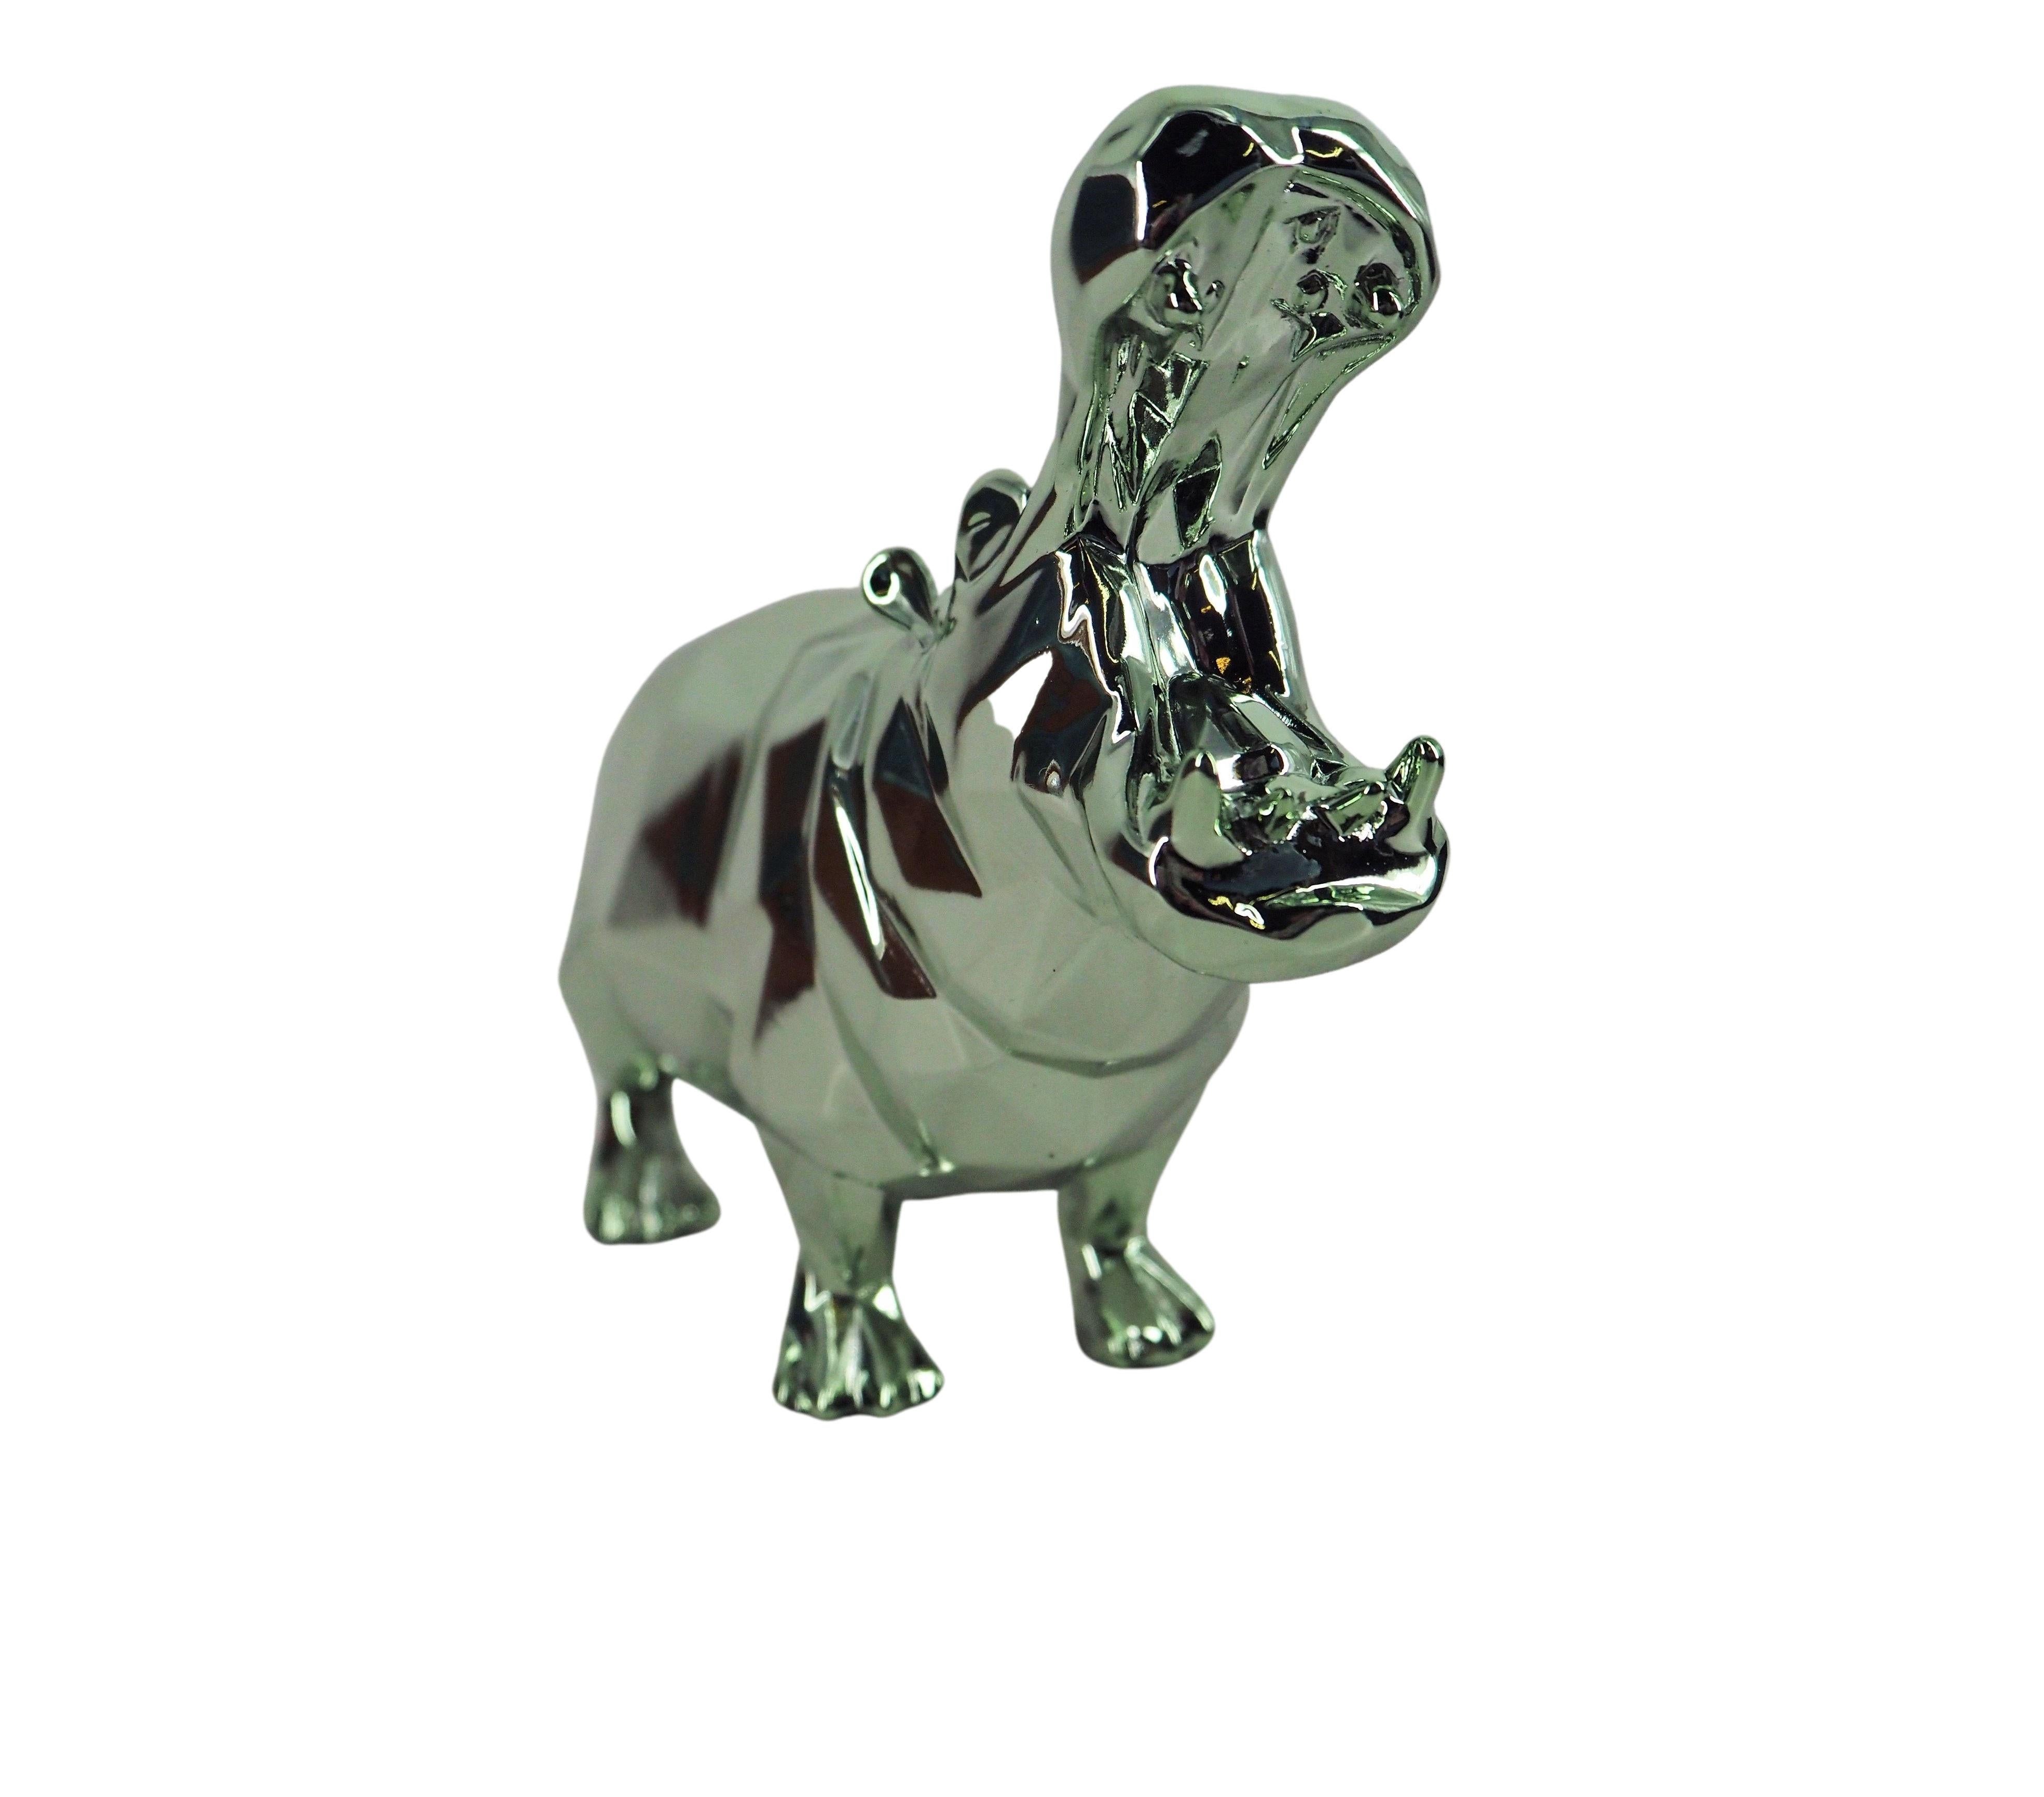 Richard Orlinski Figurative Sculpture - Hippo Spirit (Water green edition) - Sculpture in original box with artist coa